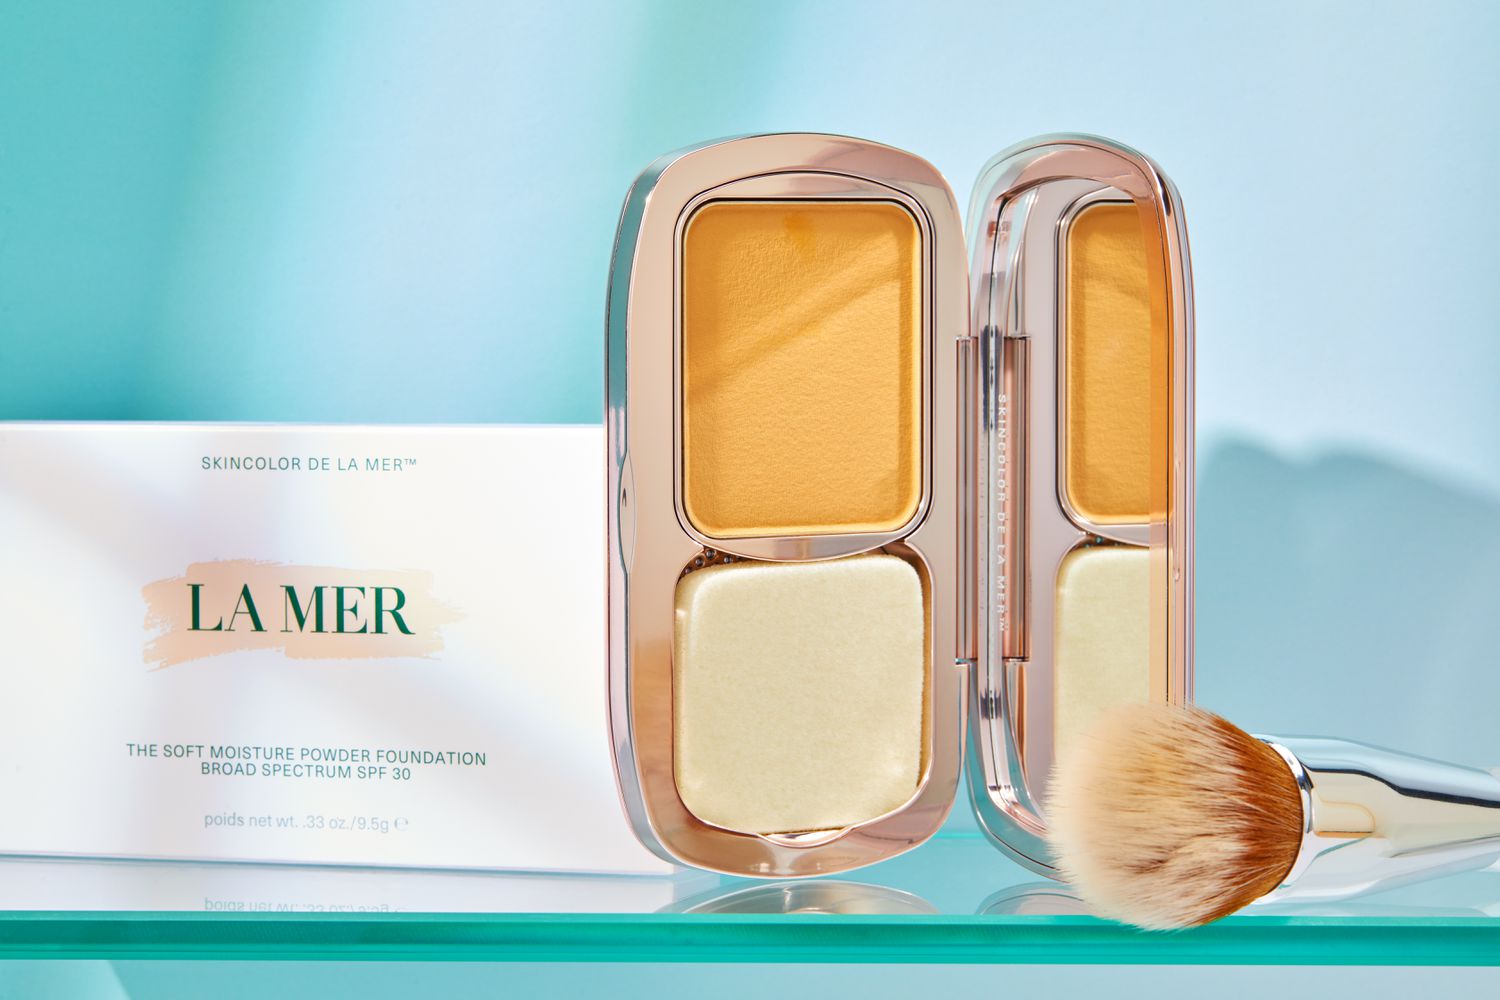  La Mer The Soft Moisture Powder Foundation and packaging on glass shelf